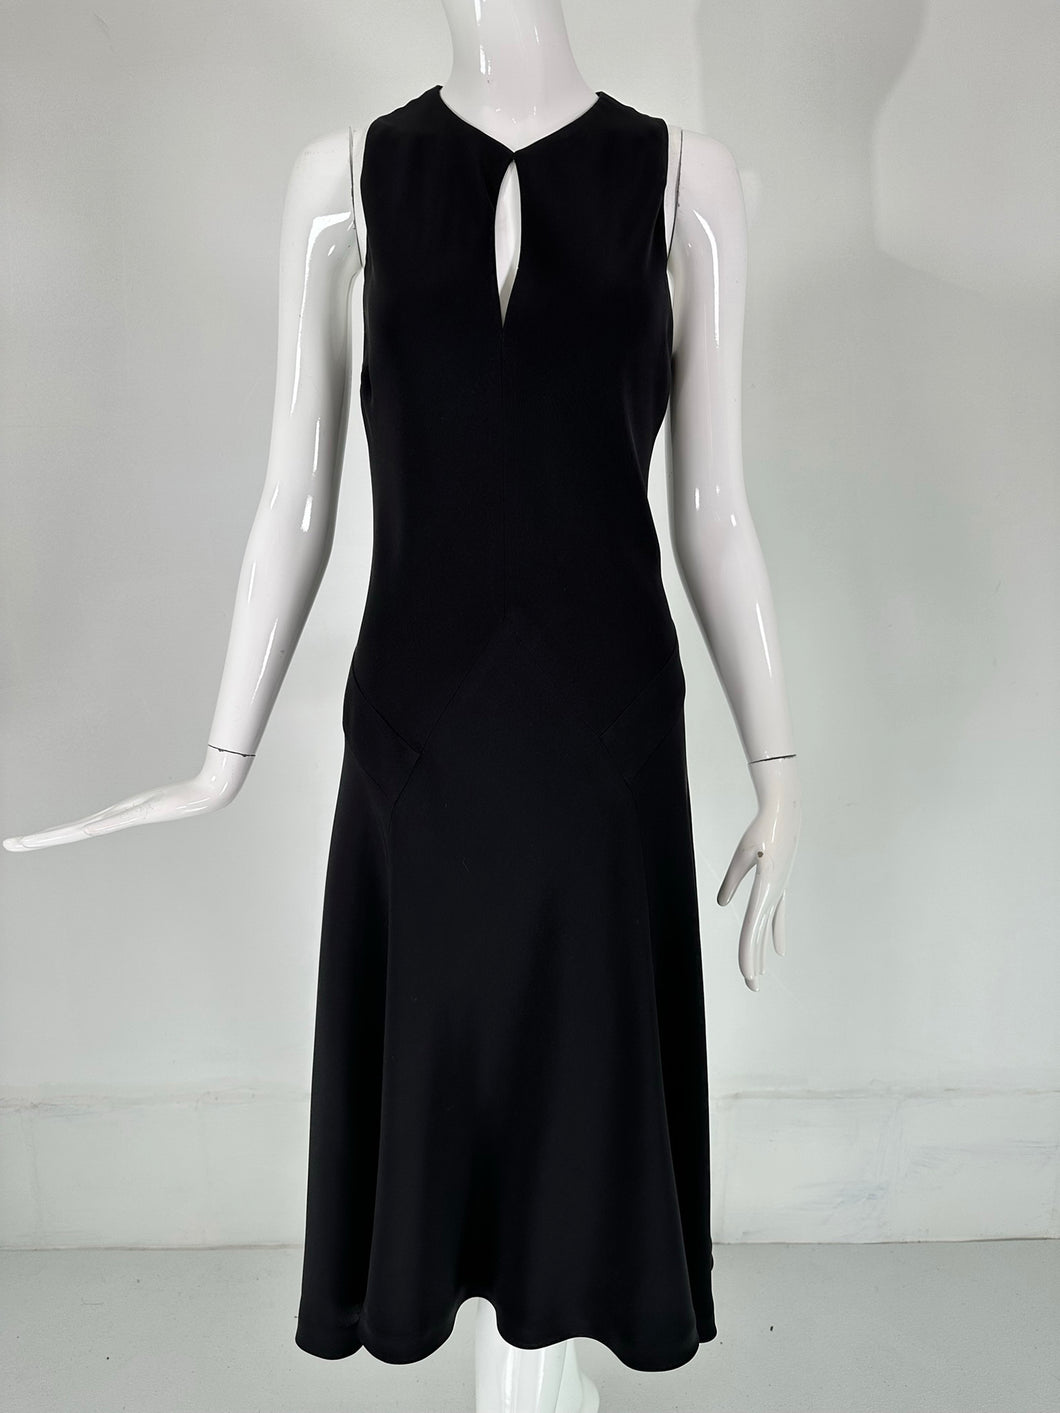 Ralph Lauren Black Label Classic Silk Bias Cut Dress 8